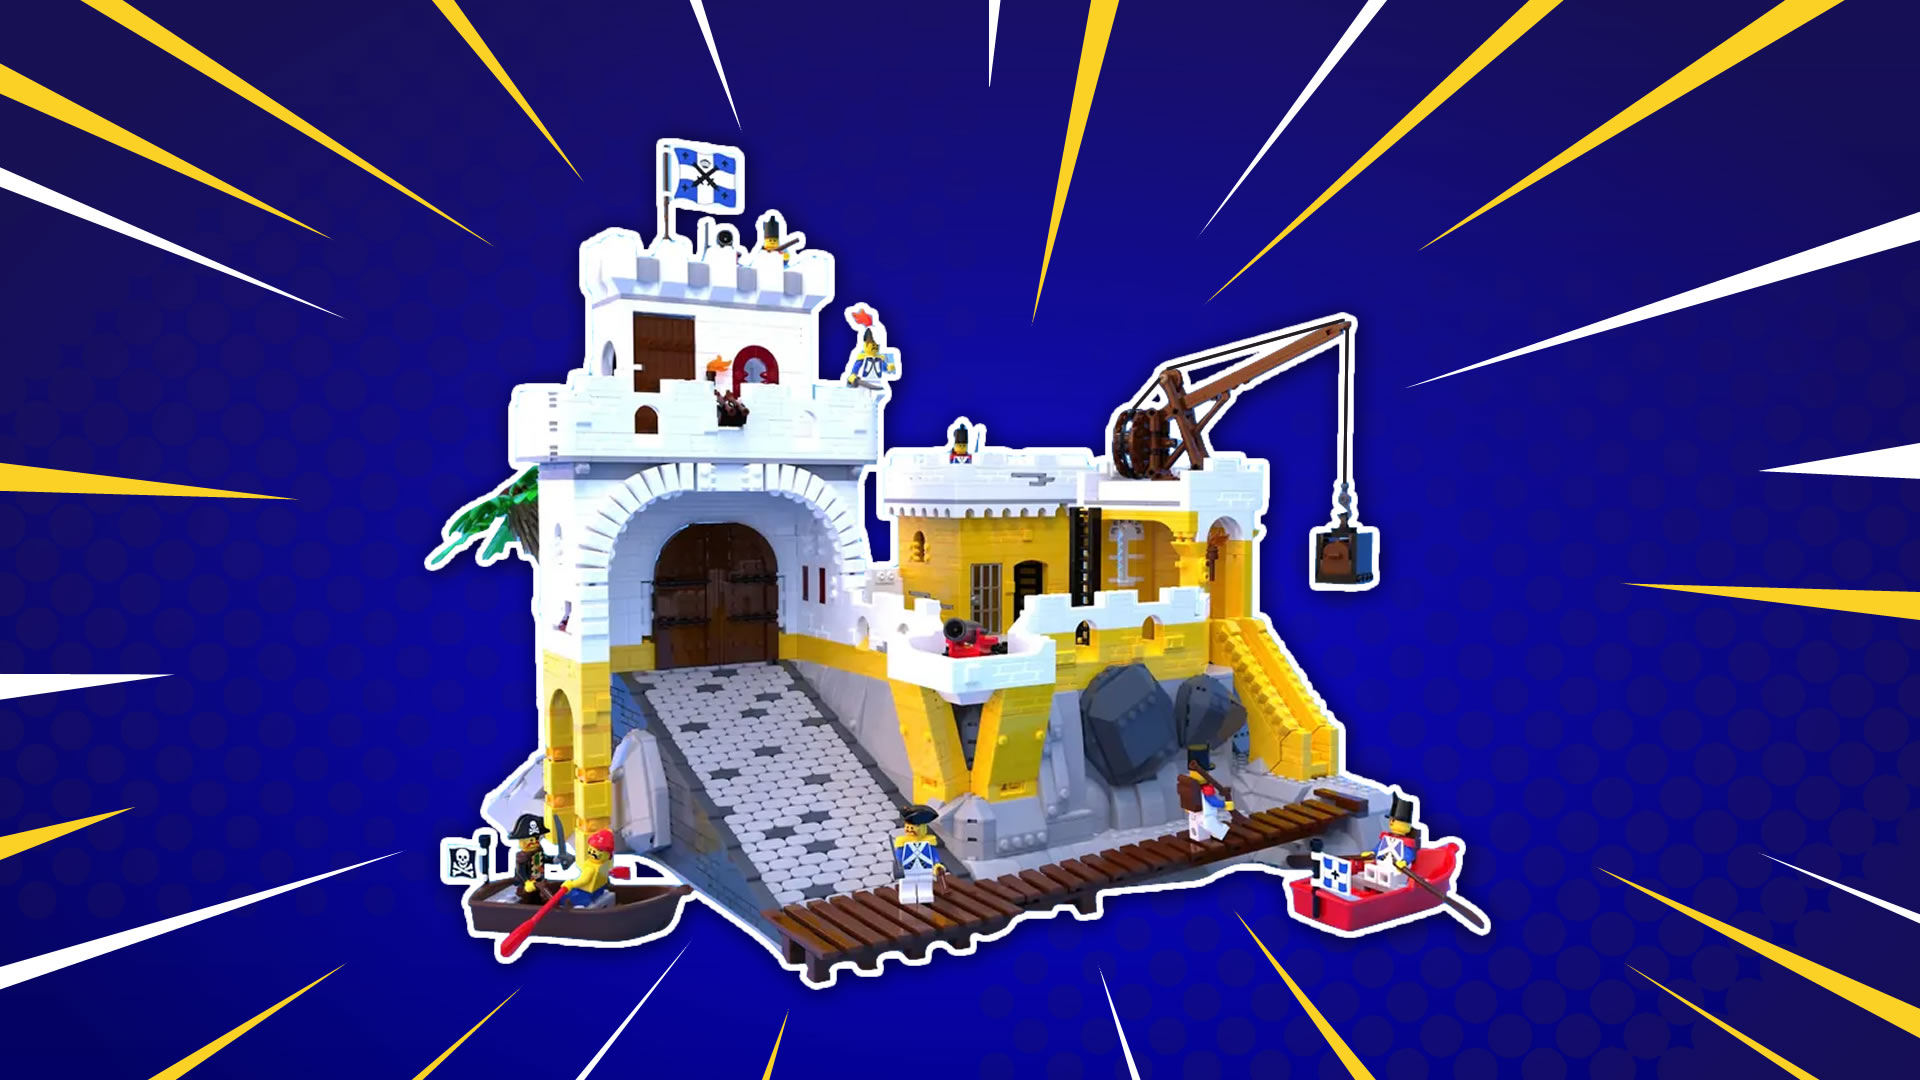 Pirate Theme Sets - LEGO 6270 Forbidden Island Vintage 1989 Pirates  Fortress Set